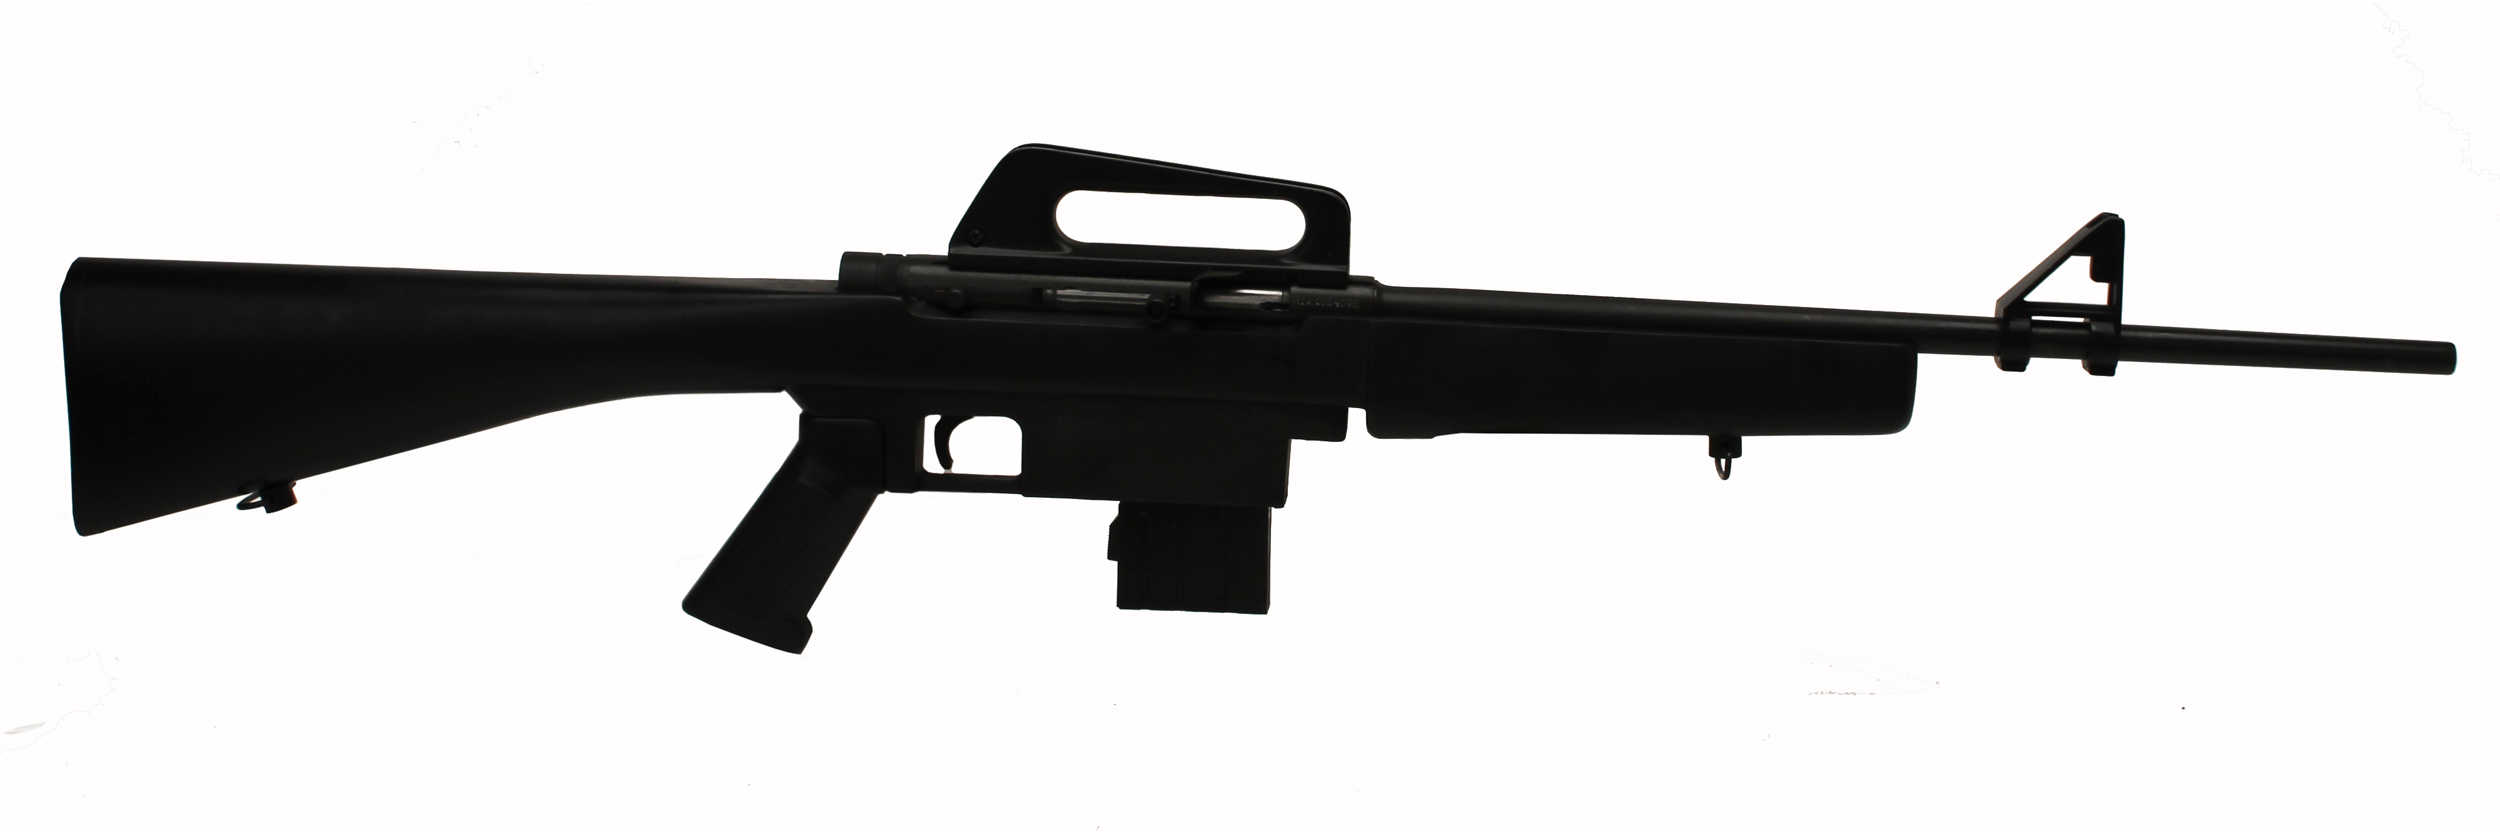 Armscor Precision Inc Armscor M1600 22 Long Rifle 1825 Barrel 10 Round Blued Semi Automatic 1844